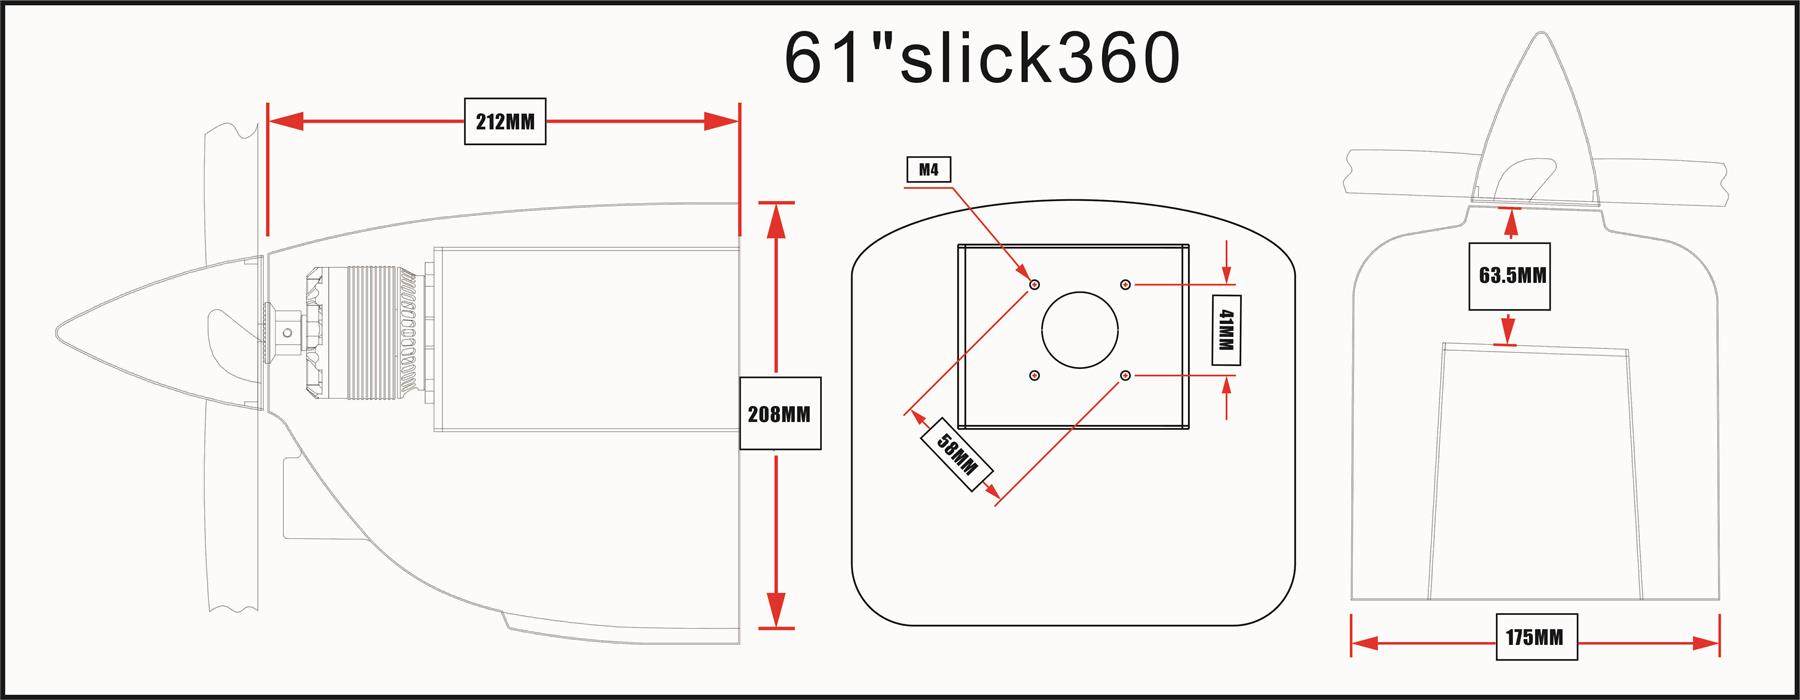 SLICK 360 - 61 V2 - white/green/blue